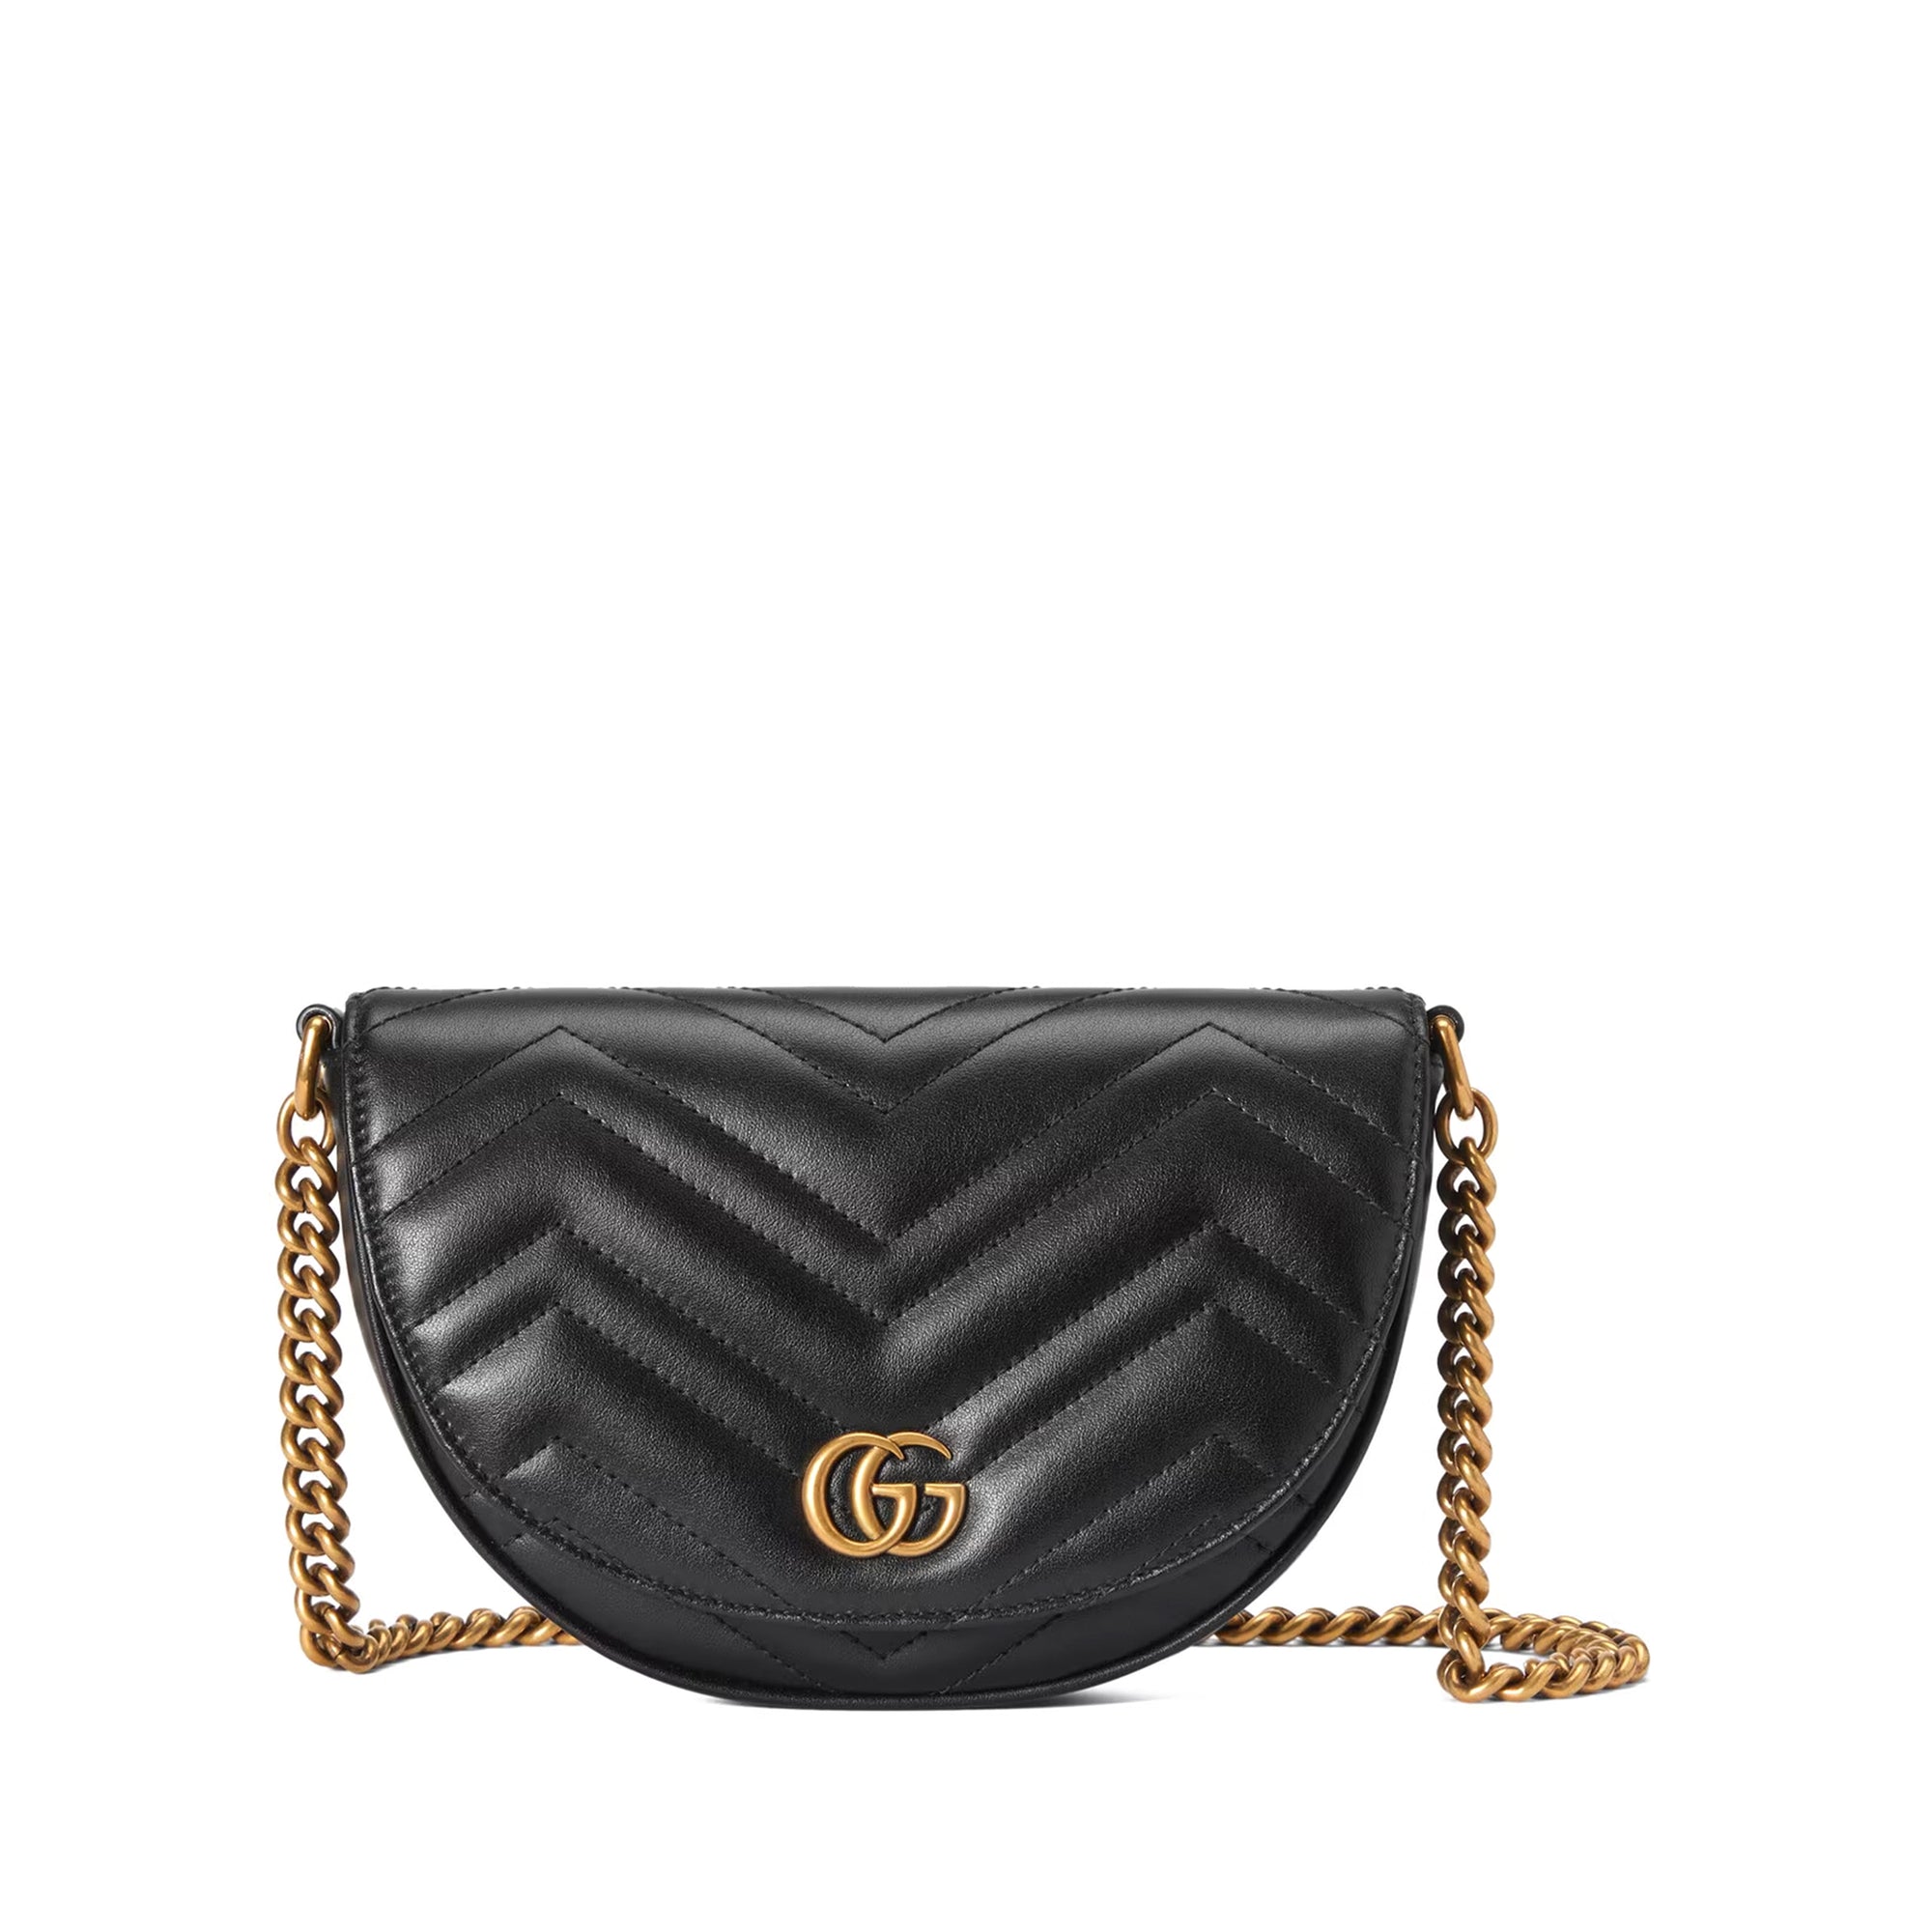 Gucci - Women’s GG Marmont Matelasse Chain Mini Bag - (Black) view 1